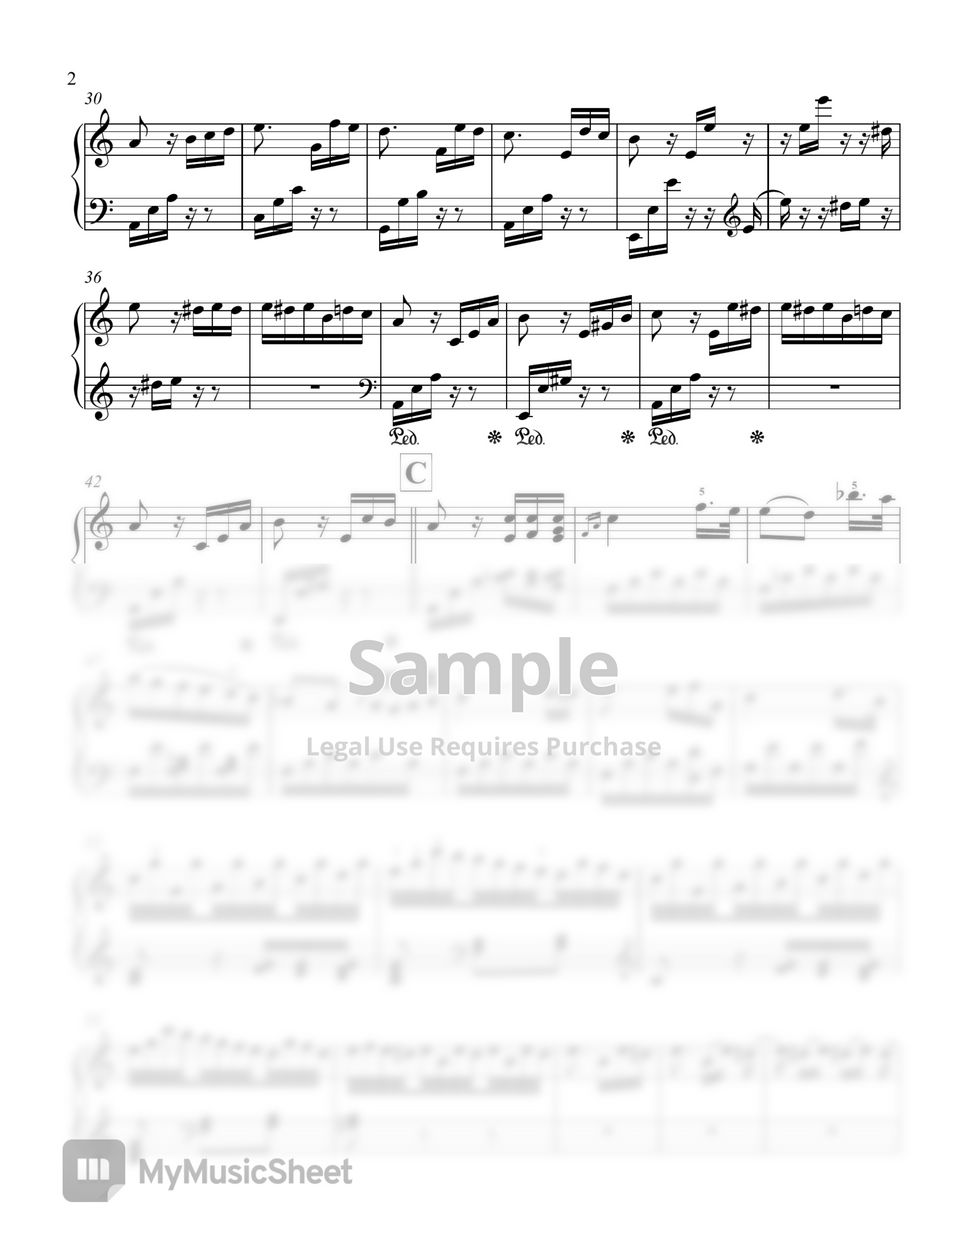 L.V Beethoven - For Elise by Hai Mai